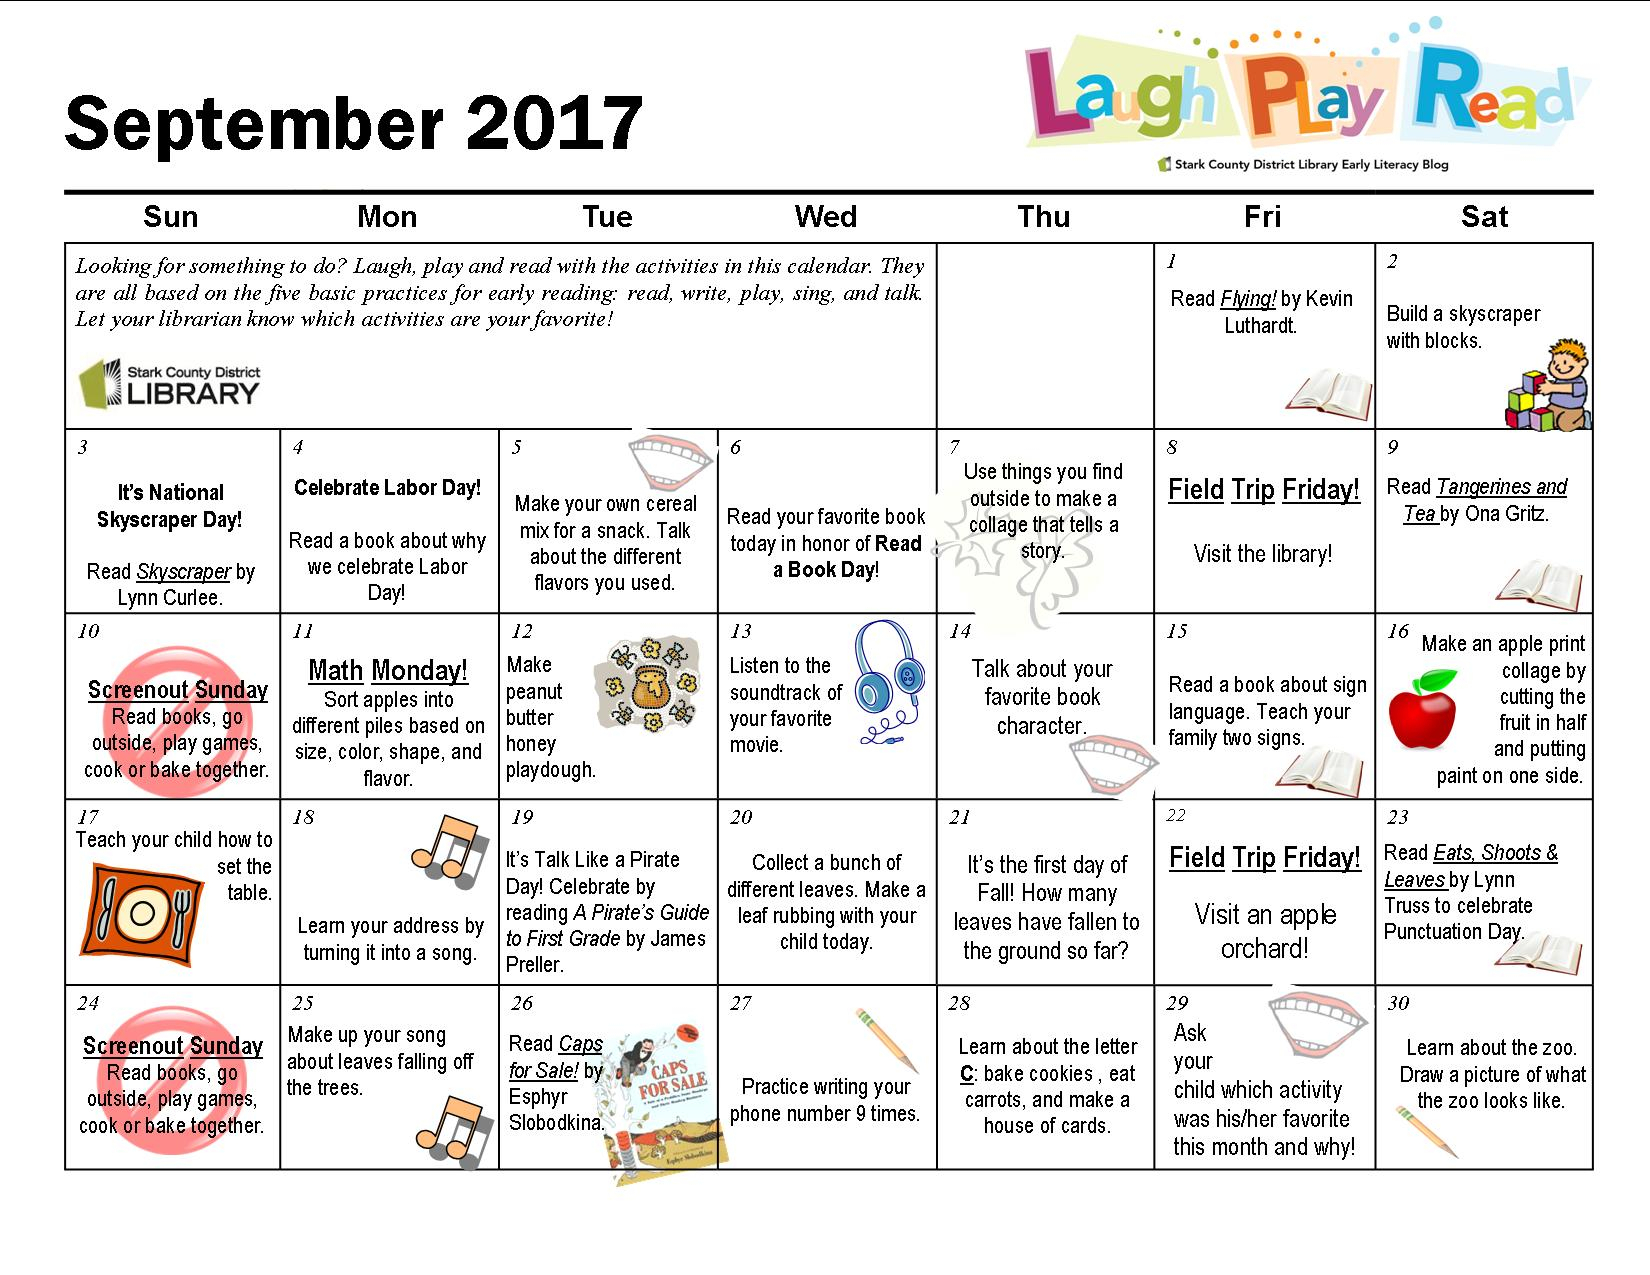 September Monthly Calendar | Laughplayread